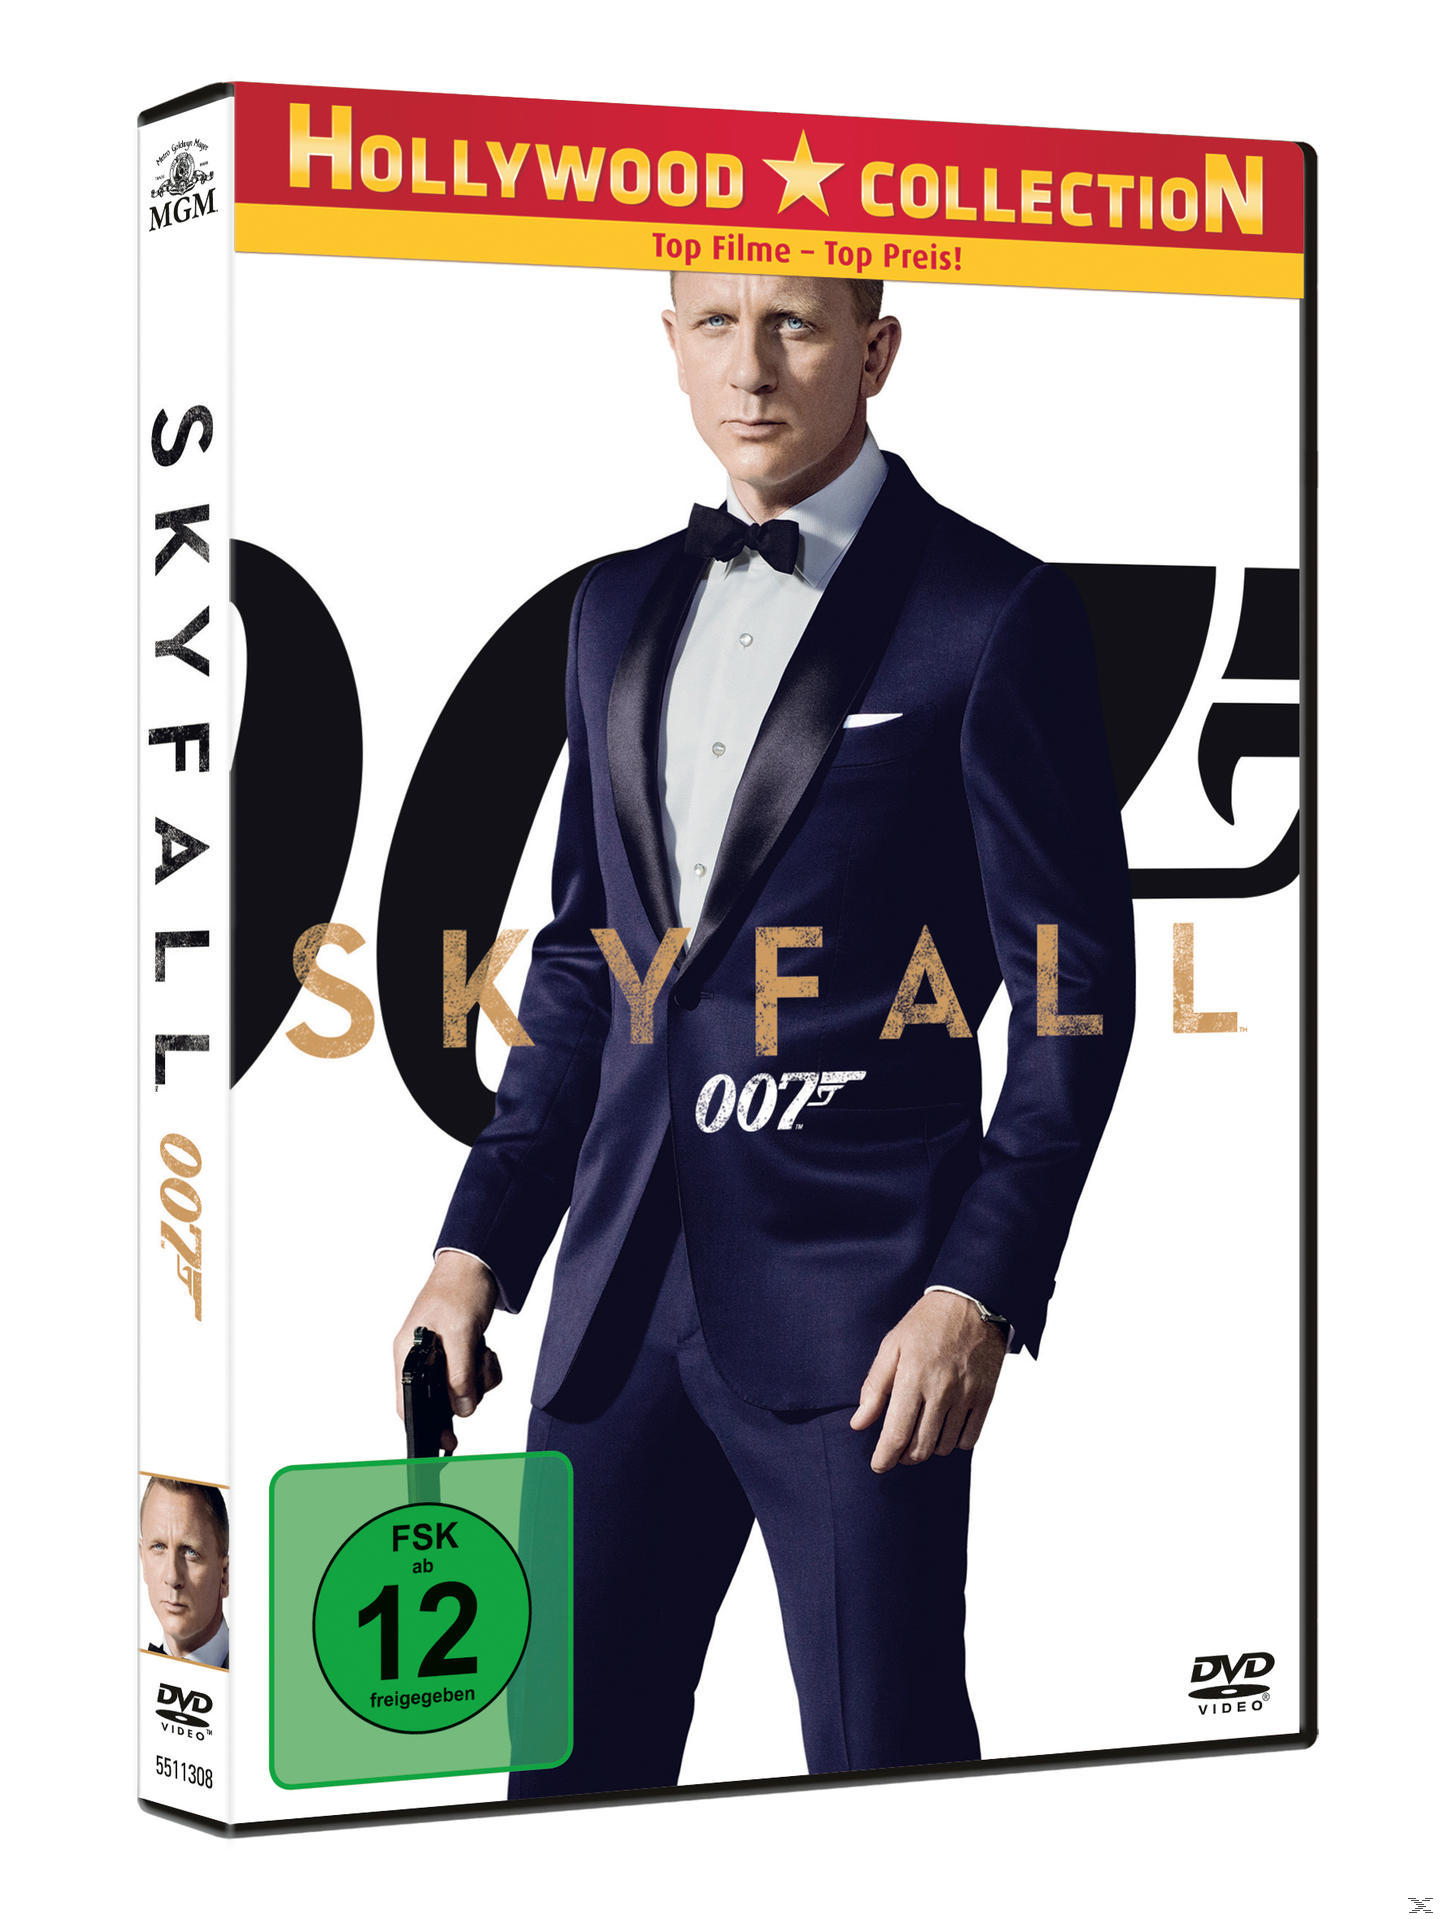 James Skyfall DVD 007 Bond -